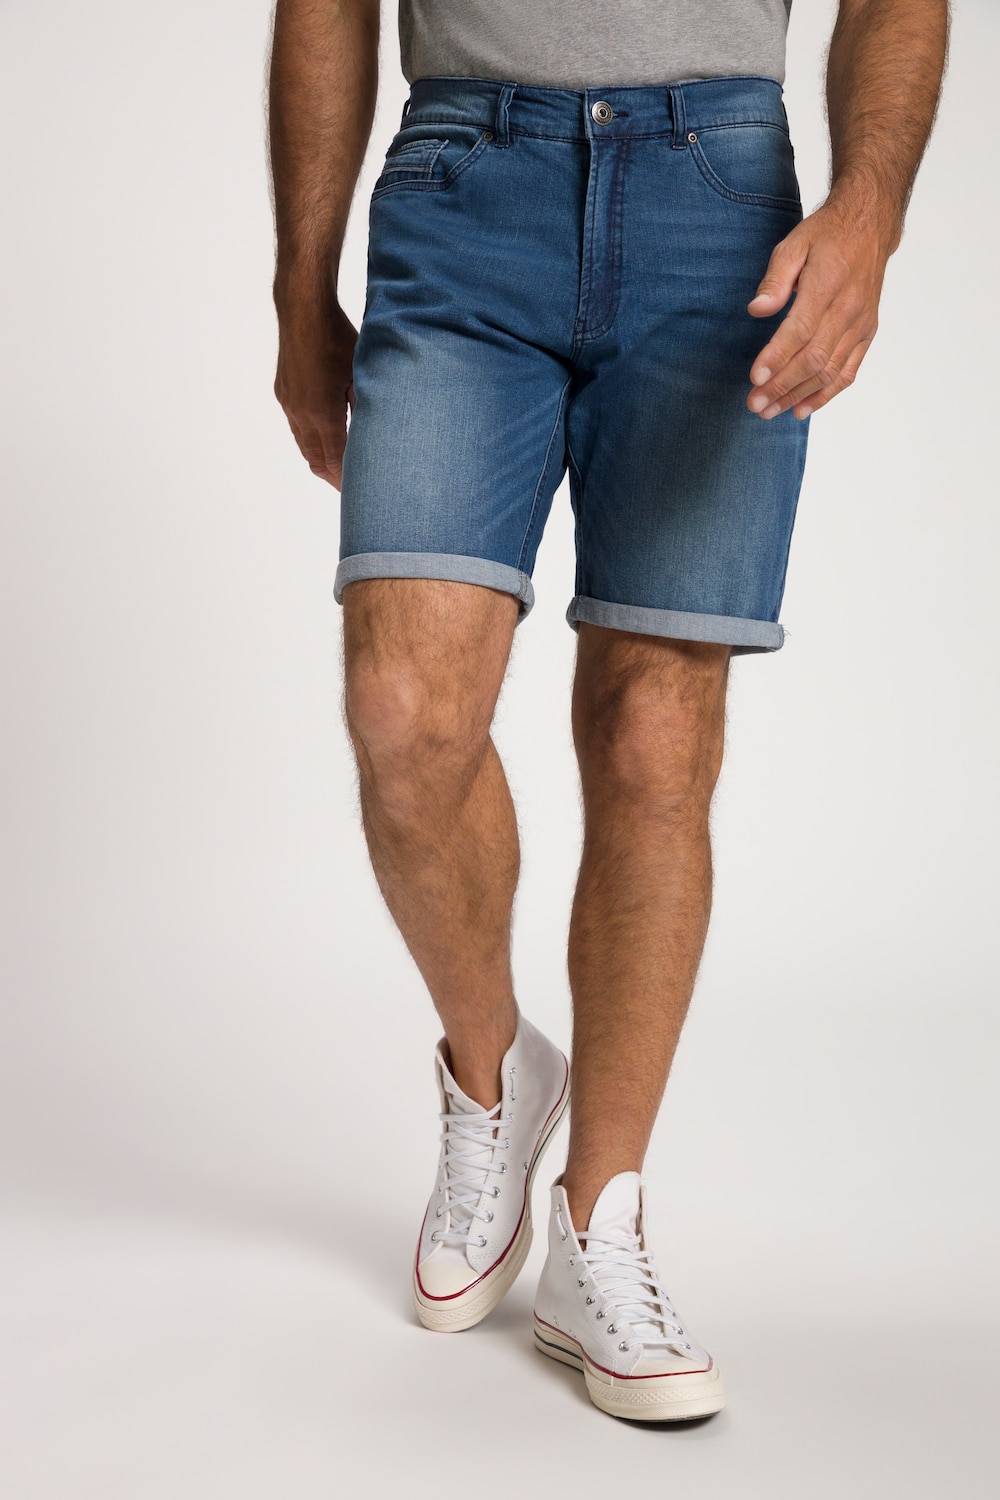 Plus Size High Stretch Belly Fit Denim Bermuda Shorts, Man, purple, size: 58, cotton, JP1880